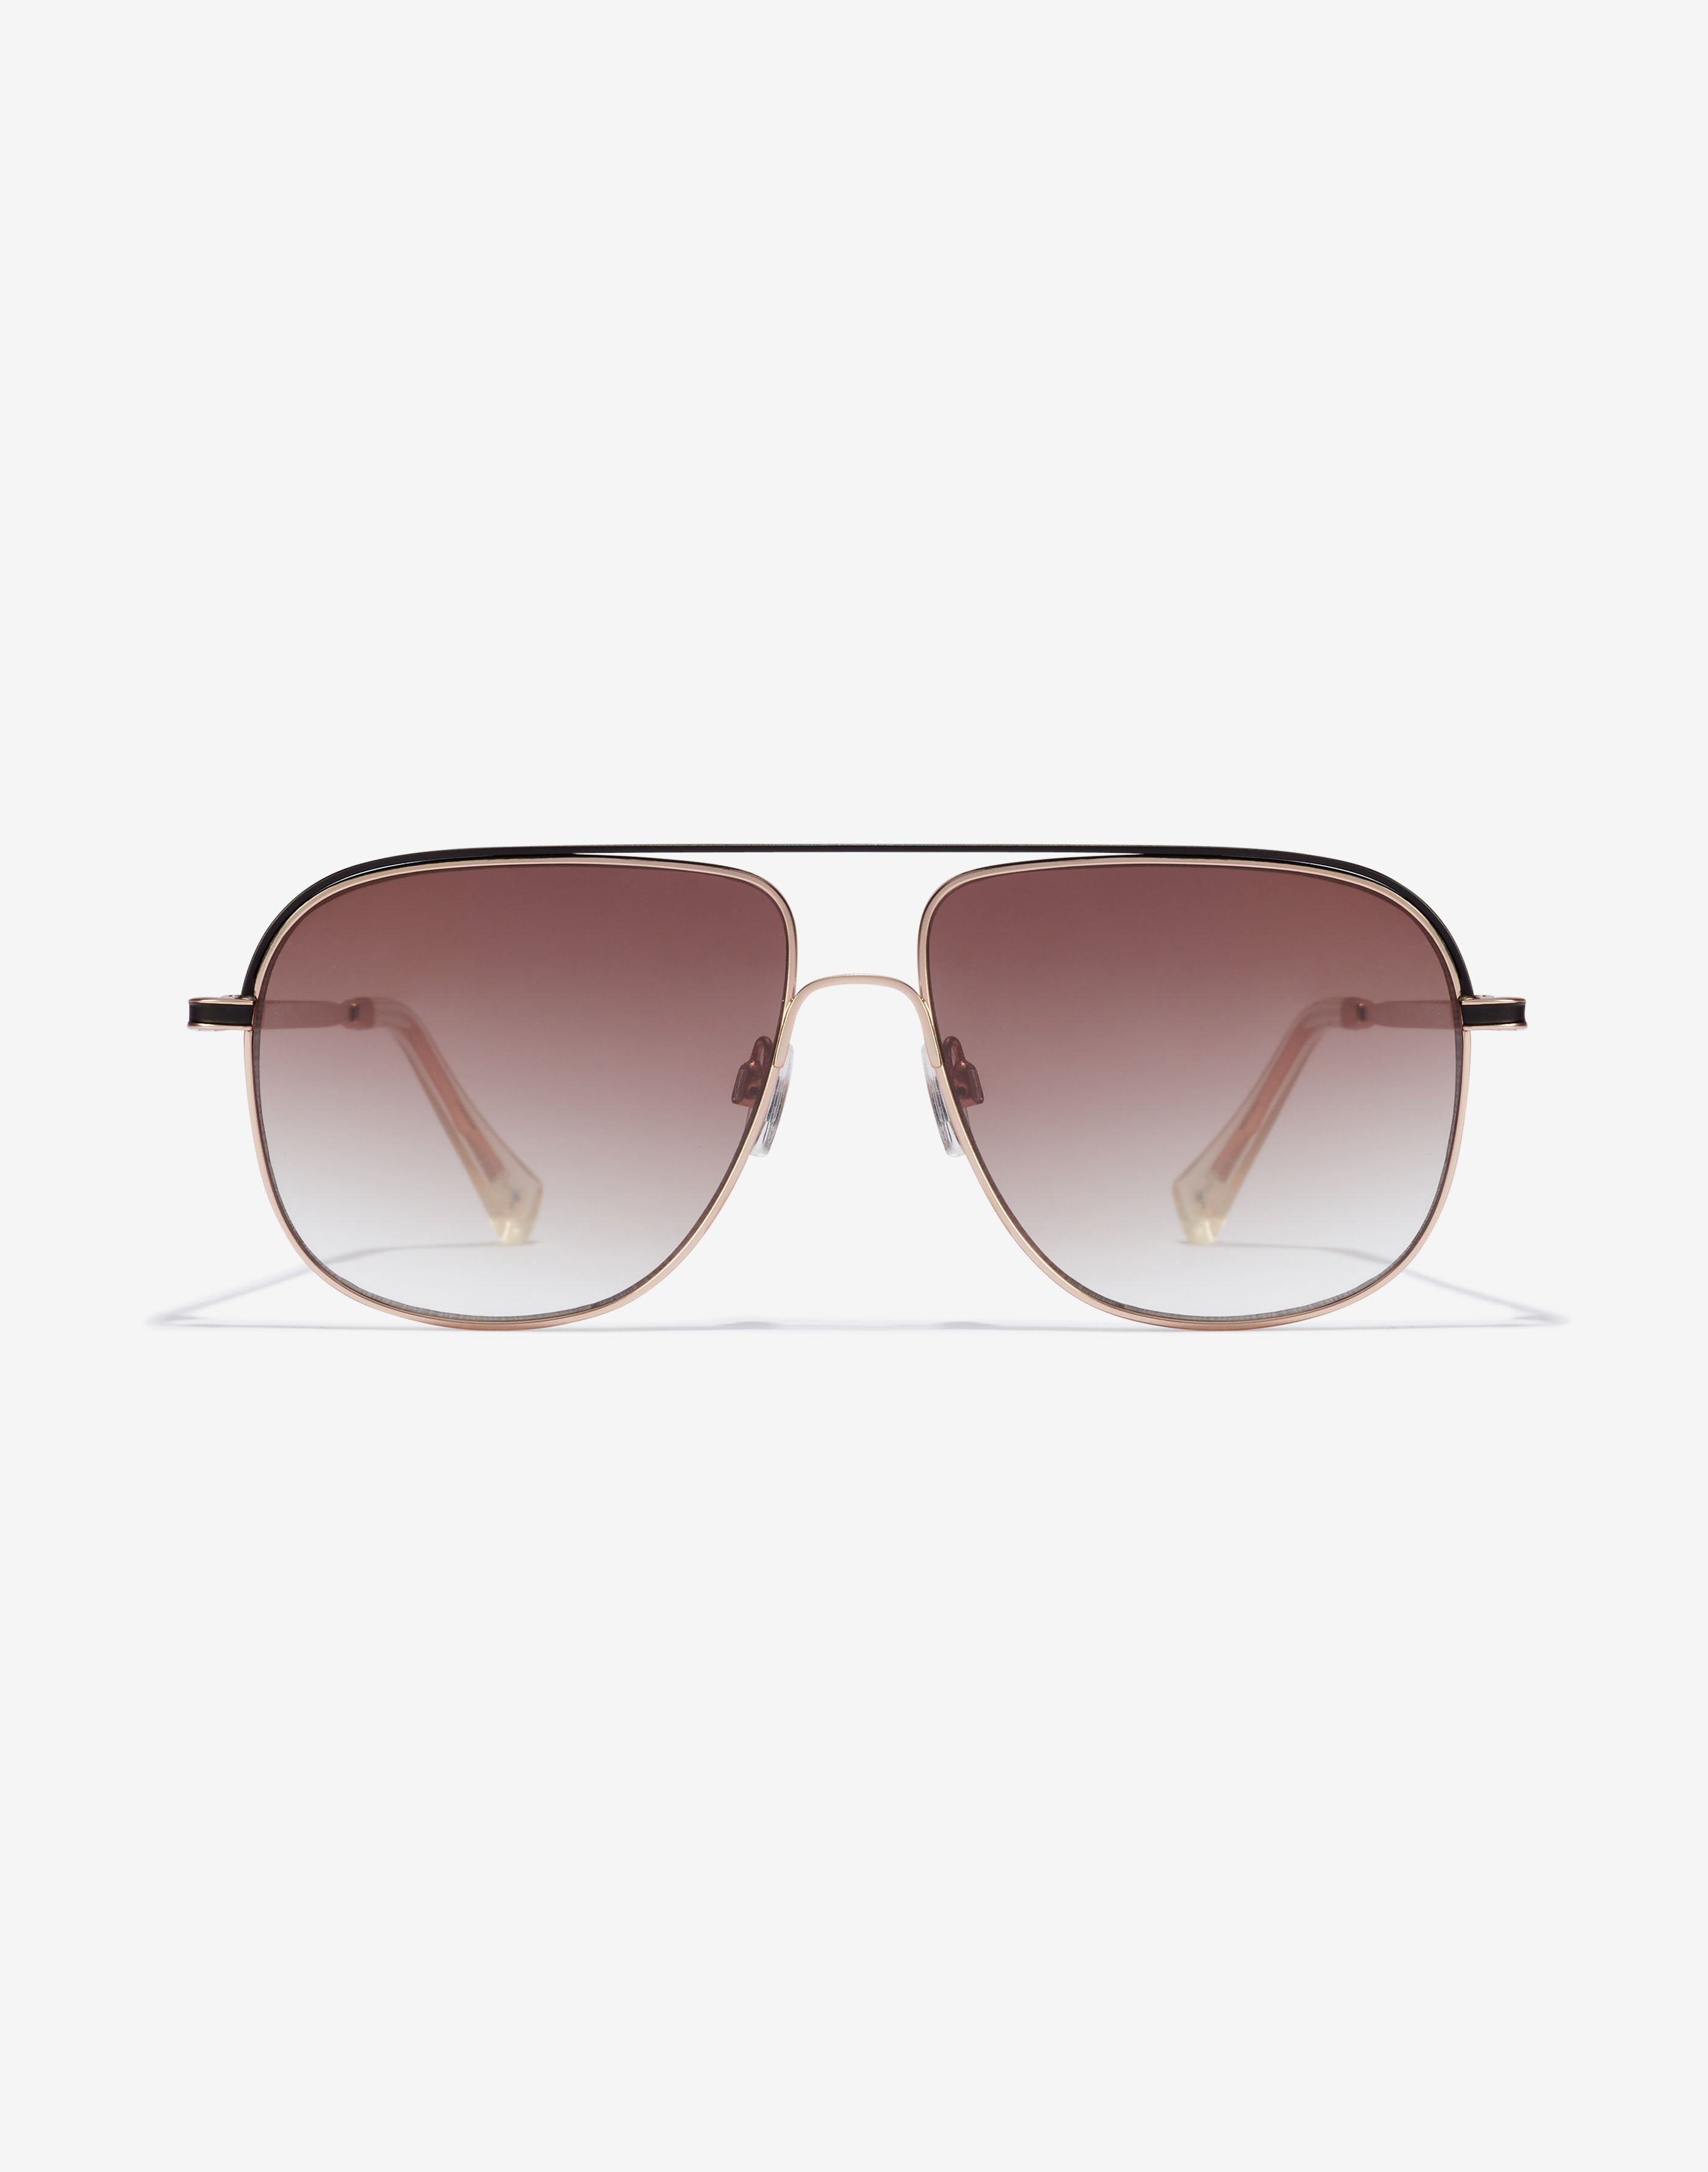 Our Ultimate Hawkers Sunglasses Bi Brown Gradient Teardrop Reviews ...